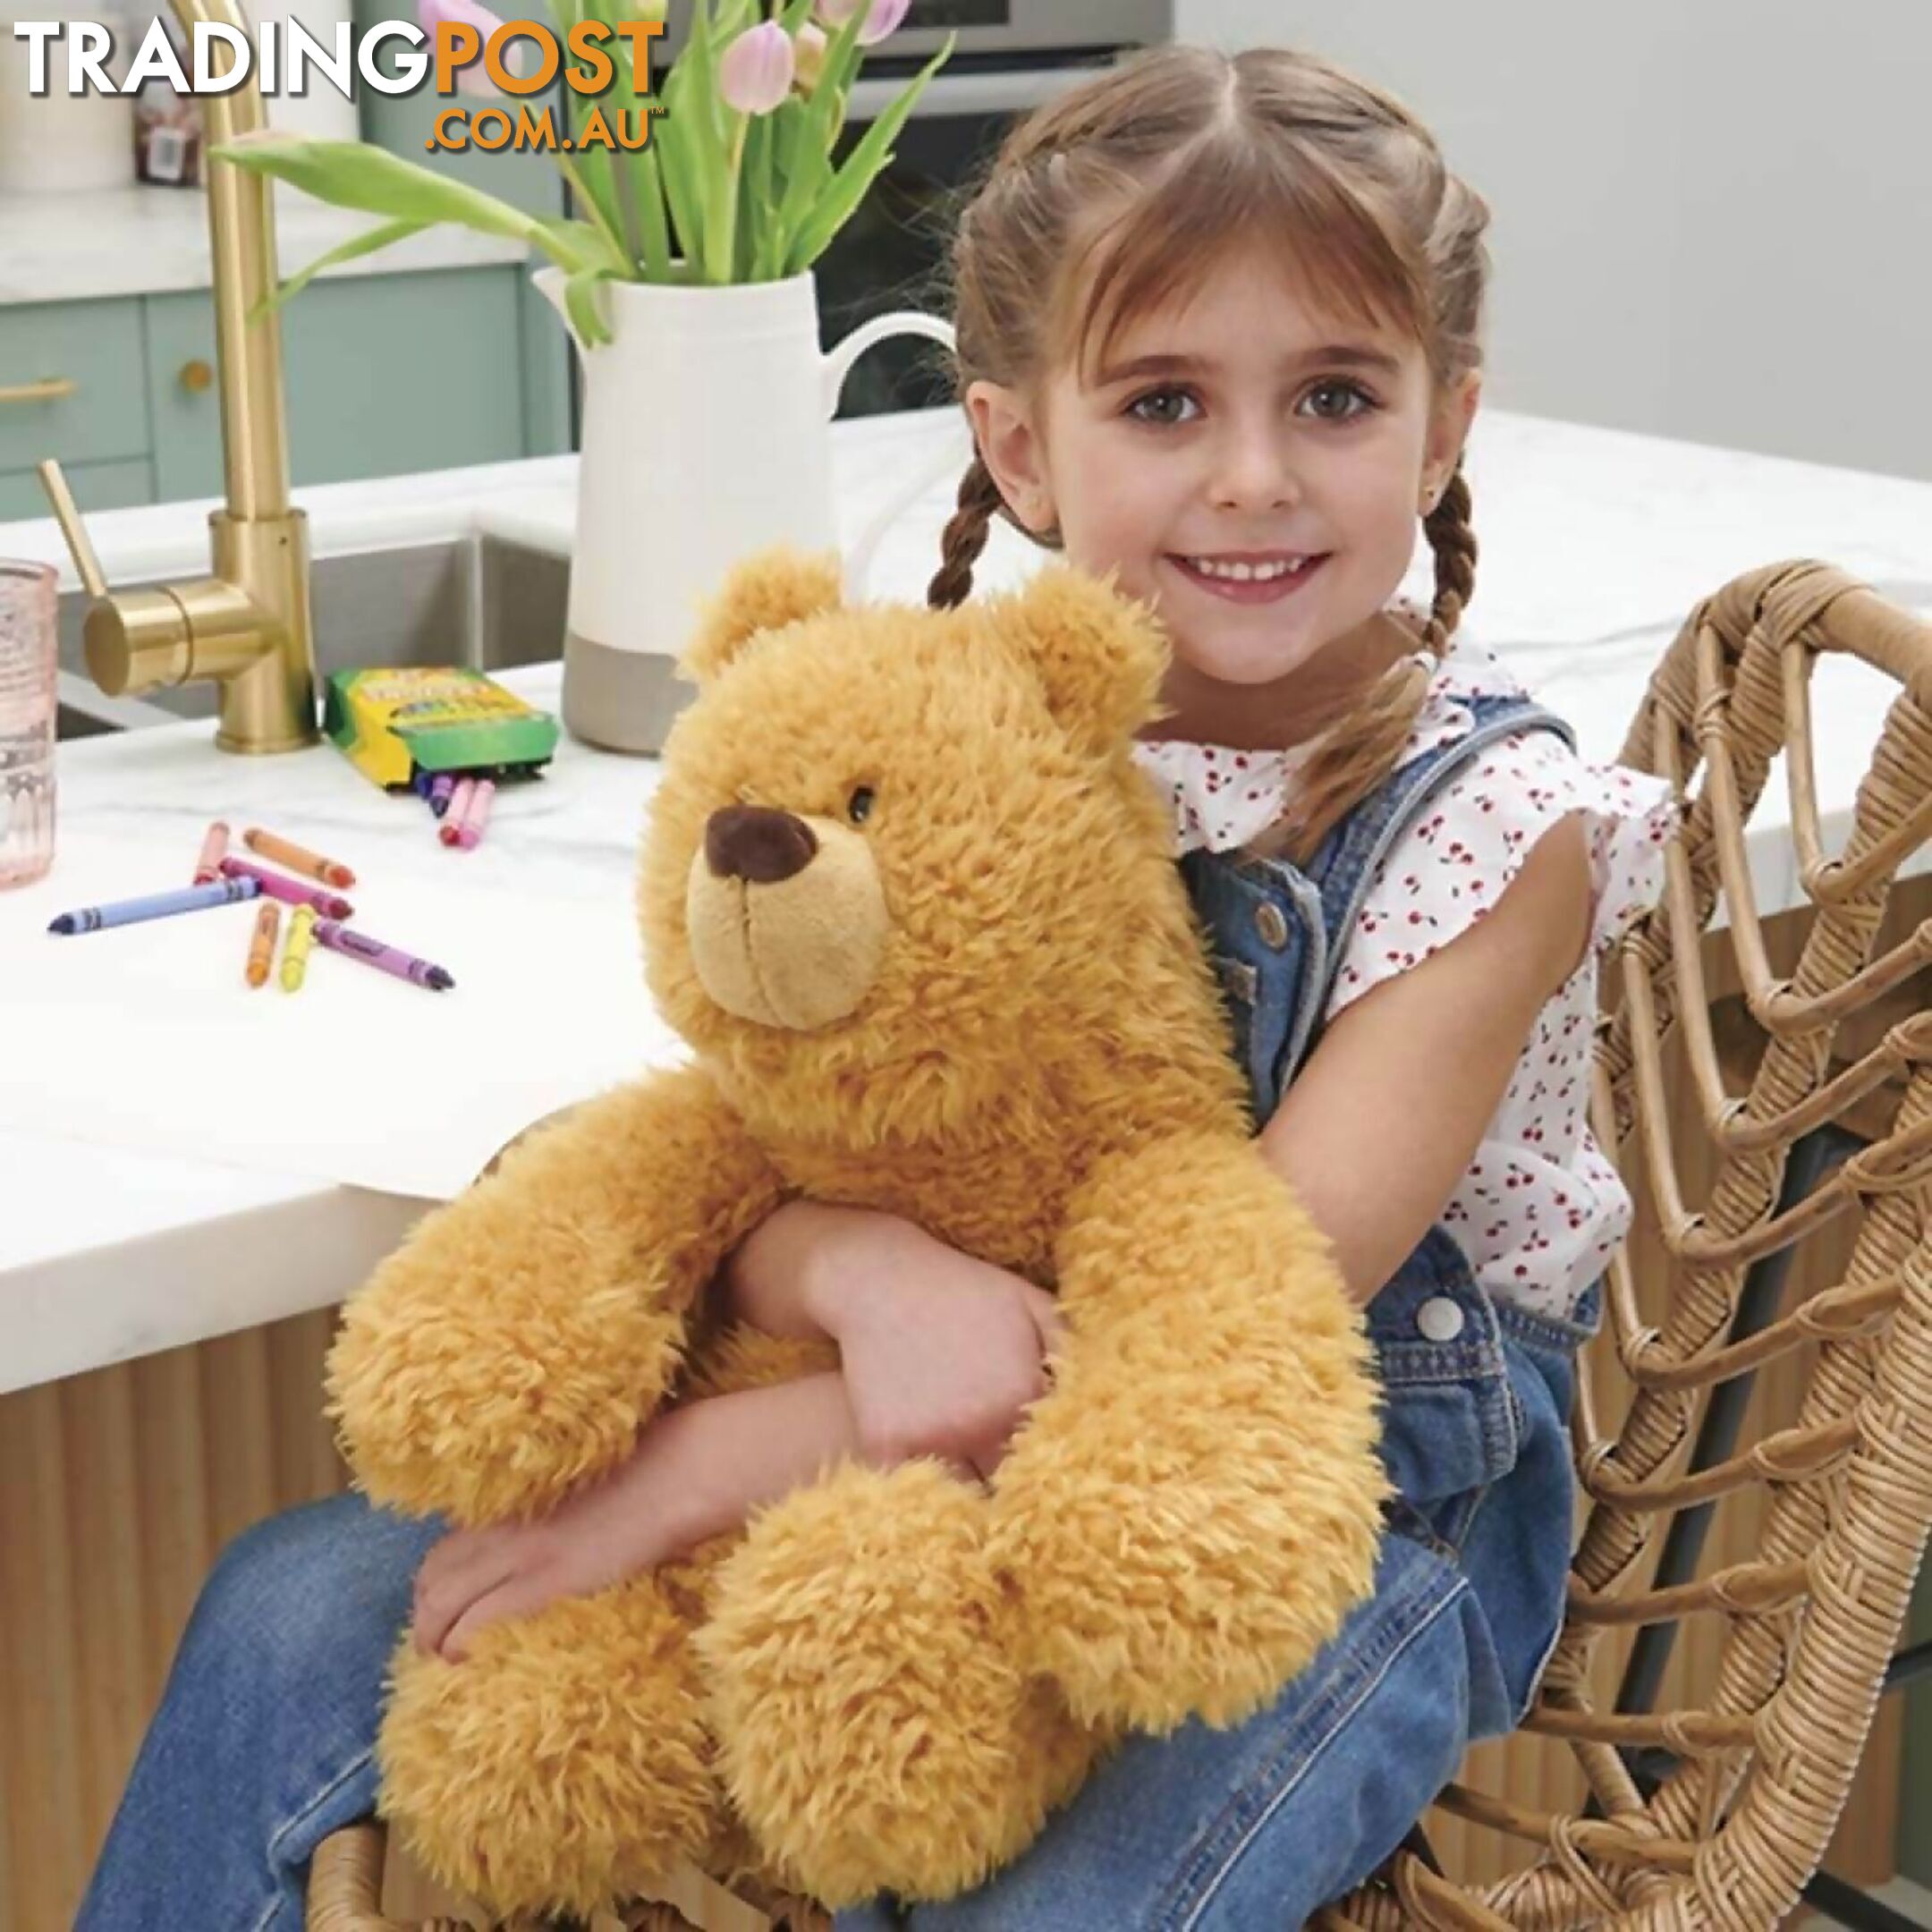 Plush Bear Growler Large Soft Plush Toy 38cm - Jsu6059821 - 778988325483